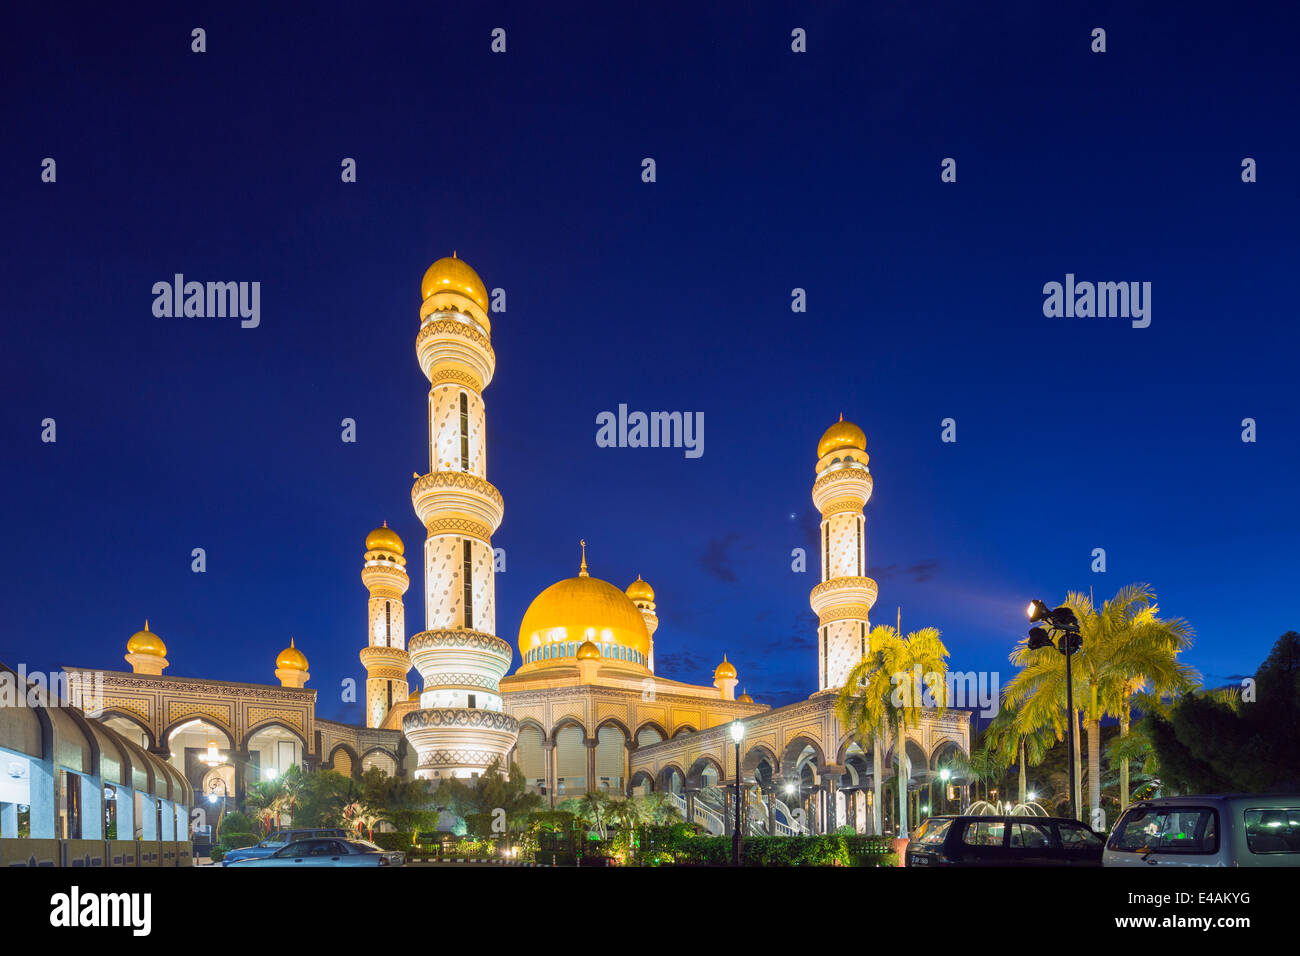 South East Asia, Kingdom of Brunei, Bandar Seri Begawan, Jame'asr Hassanal Bolkiah Mosque Stock Photo